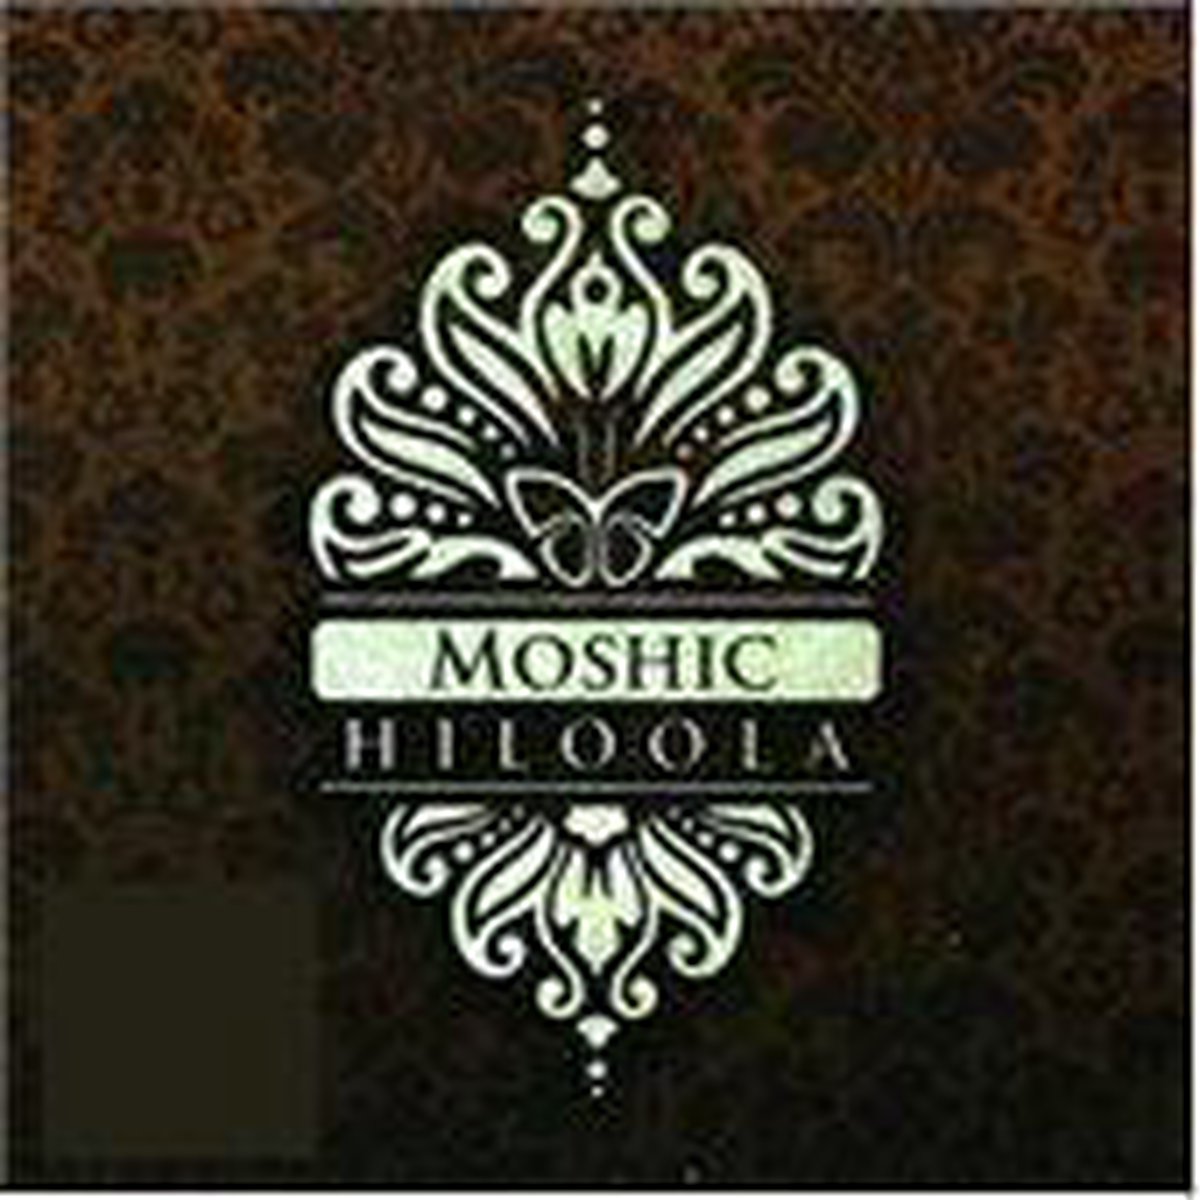 Hiloola - Moshic